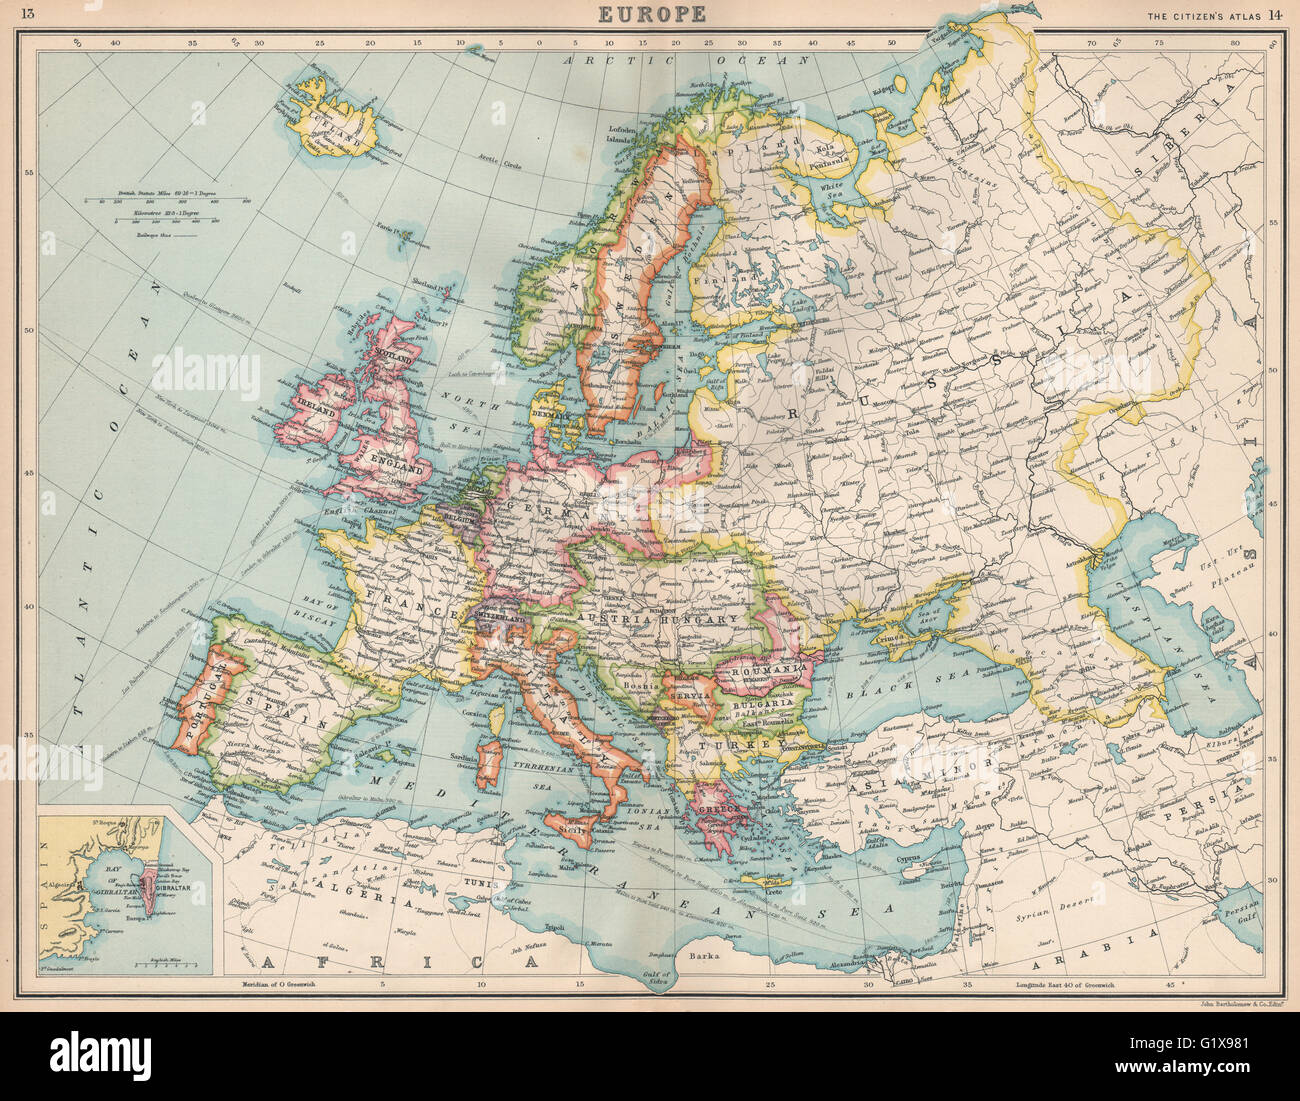 Vergelijking tragedie Overleg EUROPE. Political map. Shipping routes. Telegraph cables. BARTHOLOMEW, 1912  Stock Photo - Alamy